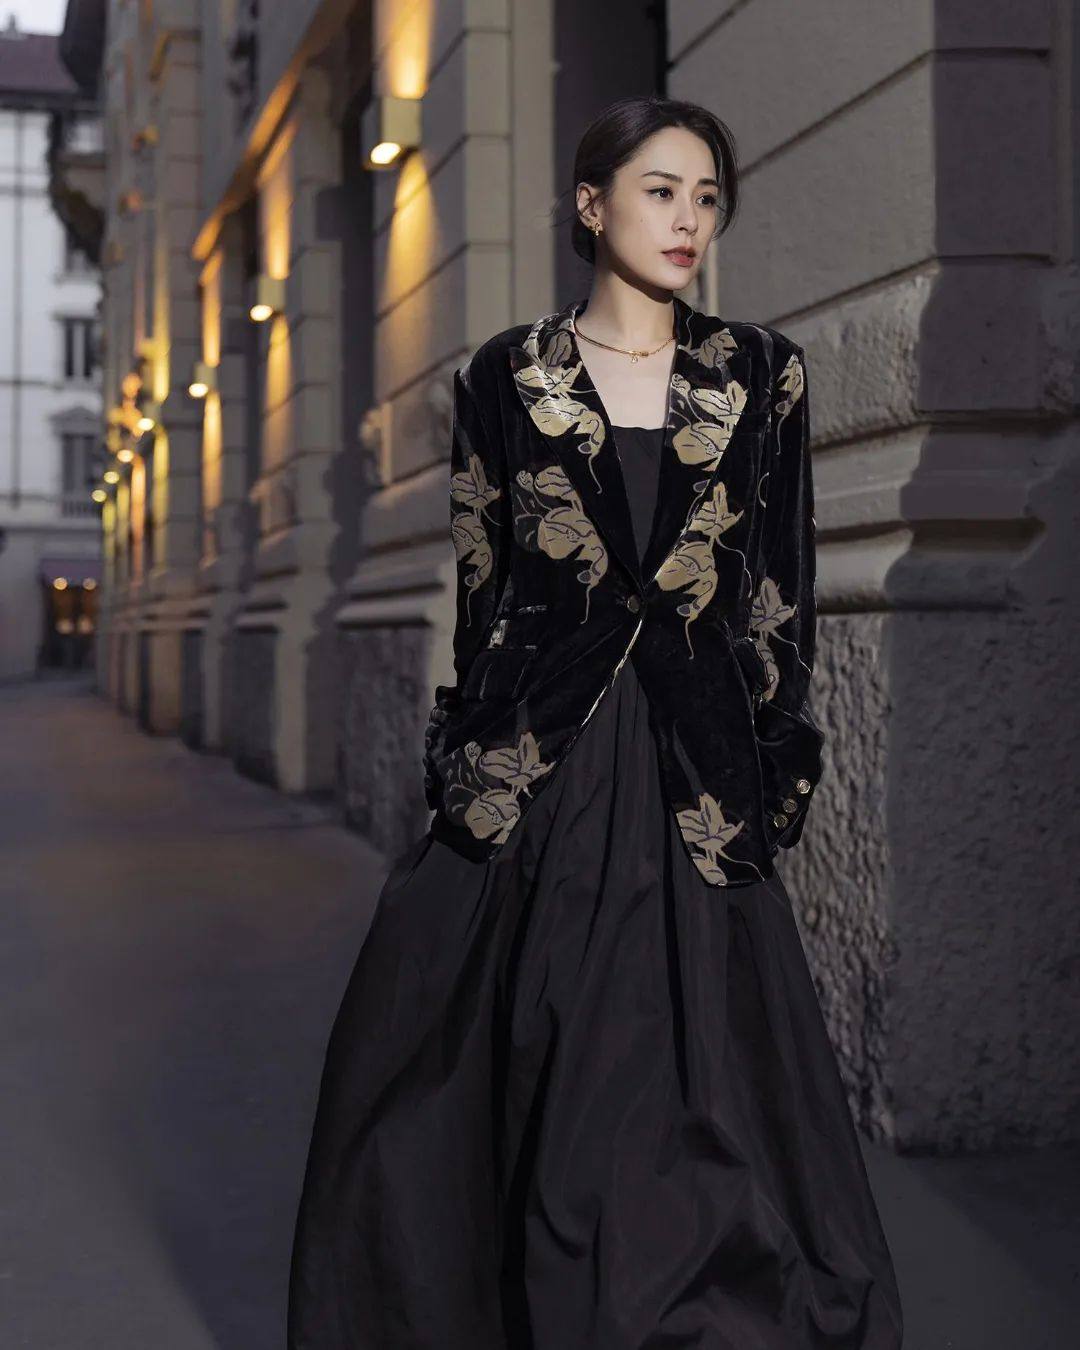 Hong Kong star Gillian Chung’s wardrobe shows her captivating sense of style. Photo: @shanghaitang/Instagram